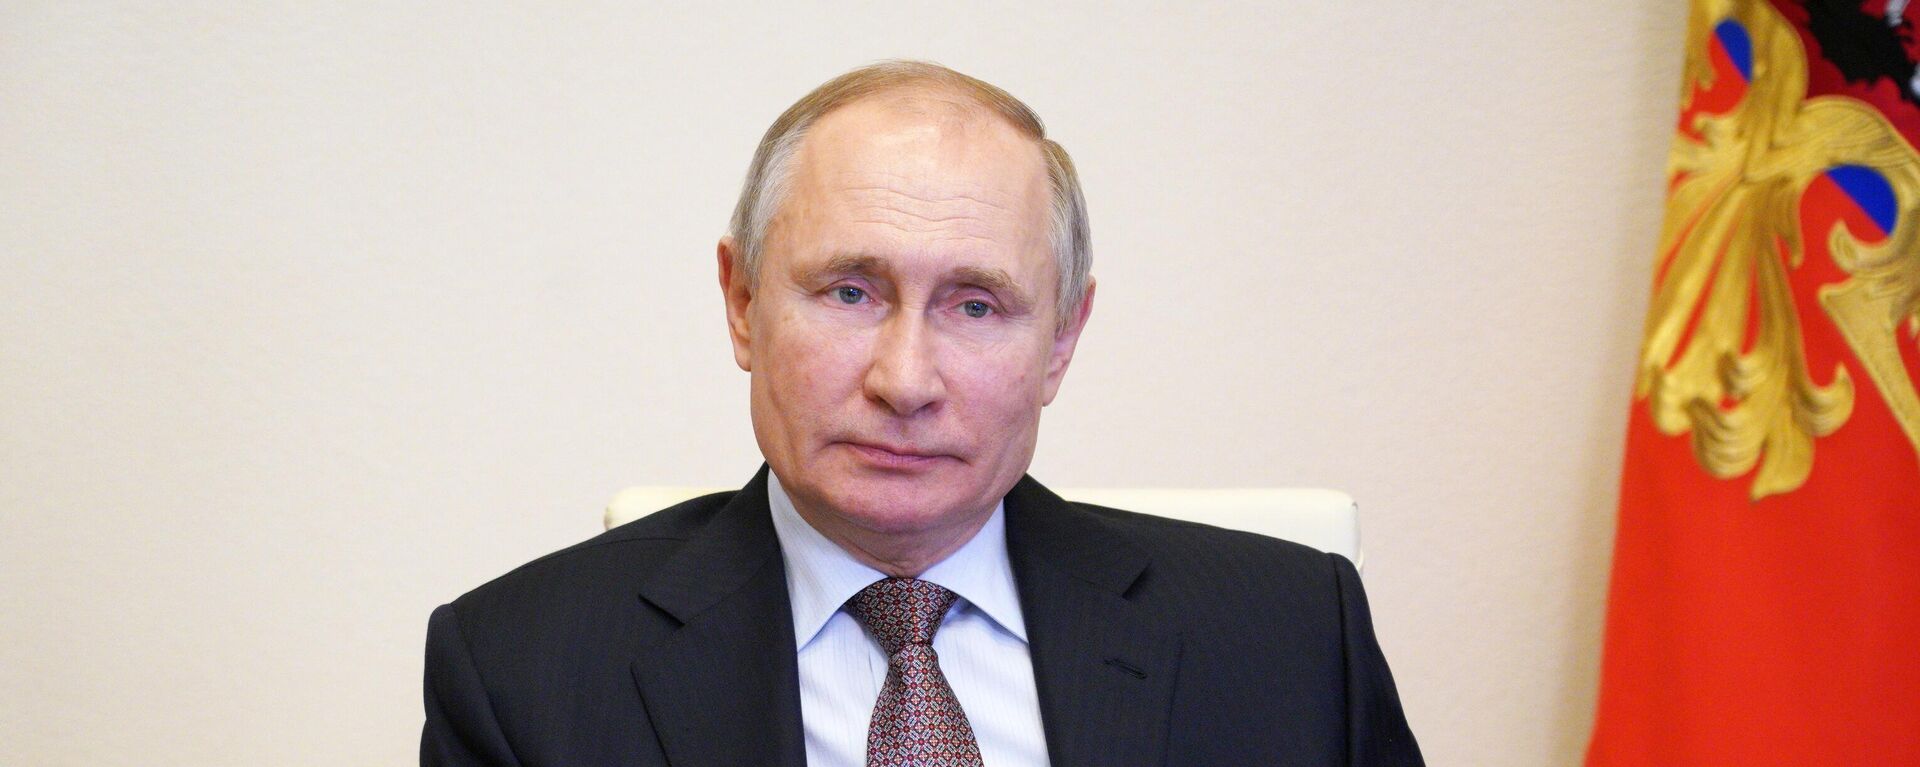 Vladímir Putin, presidente de Rusia - Sputnik Mundo, 1920, 04.06.2021